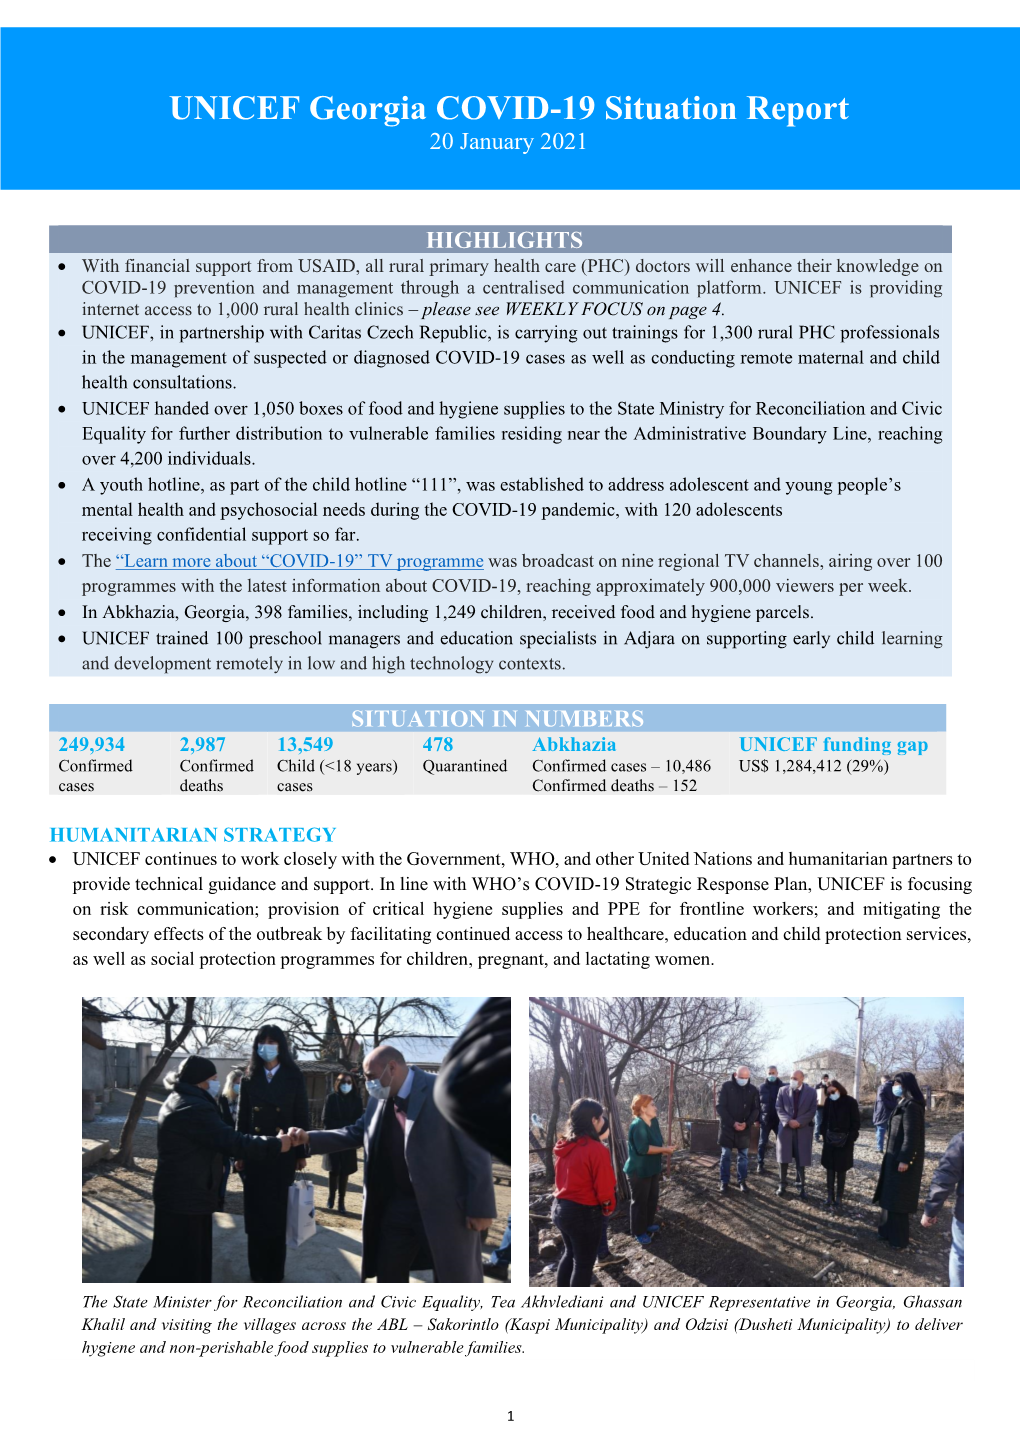 UNICEF Georgia COVID-19 Situation Report 20 January 2021